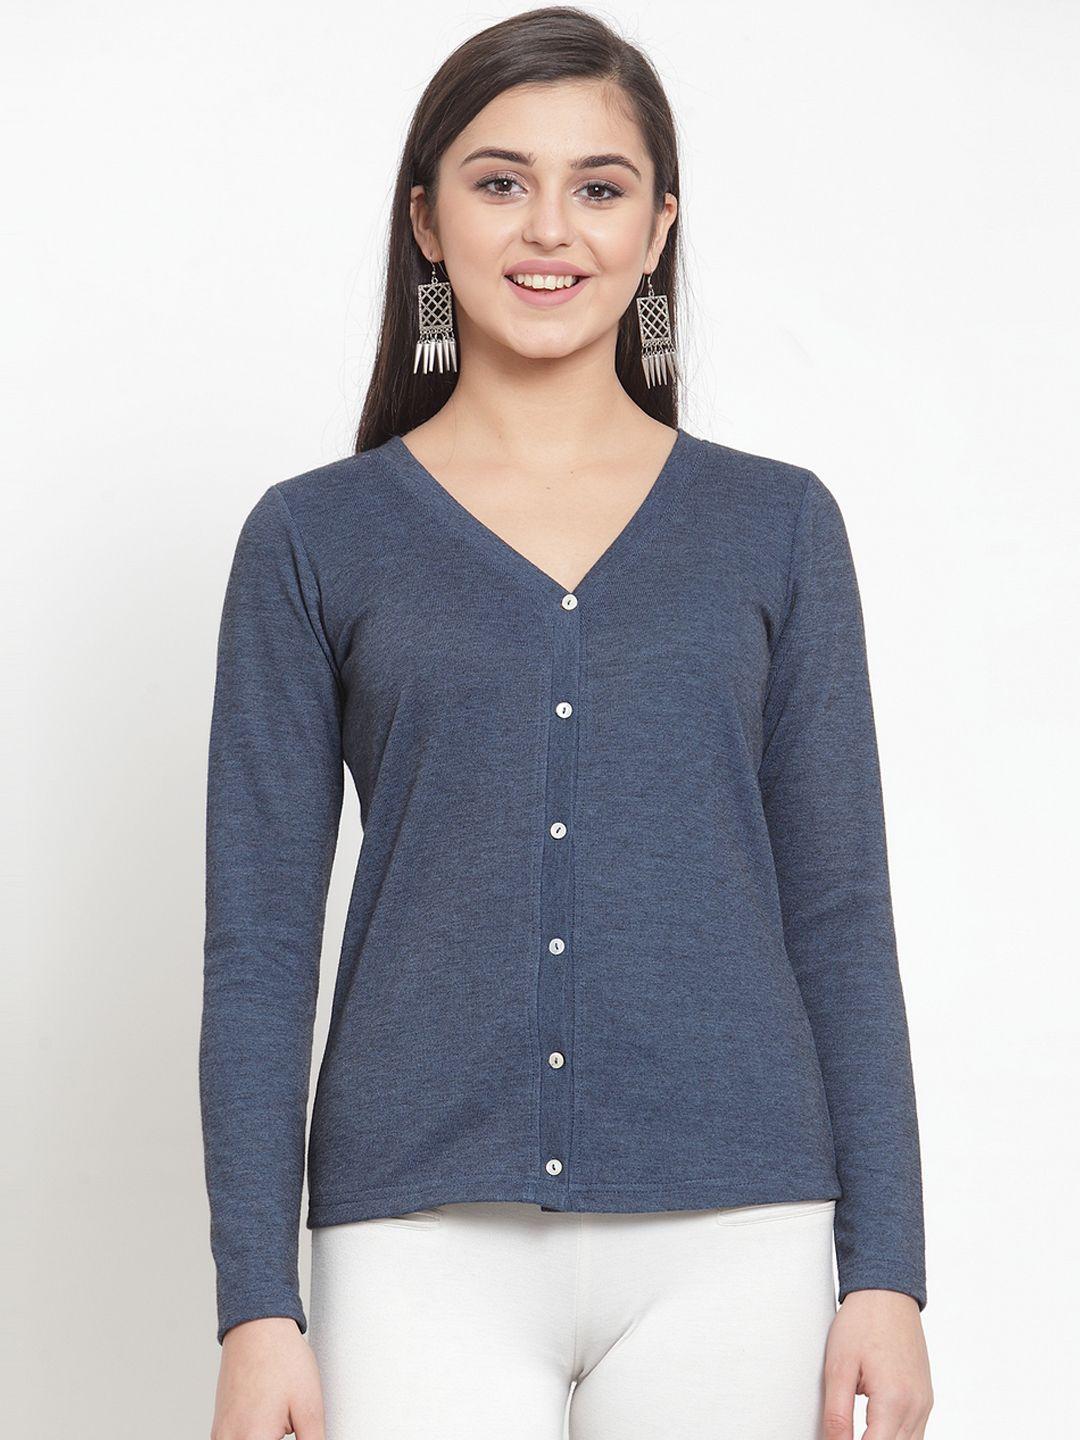 kassually women blue solid cardigan sweater